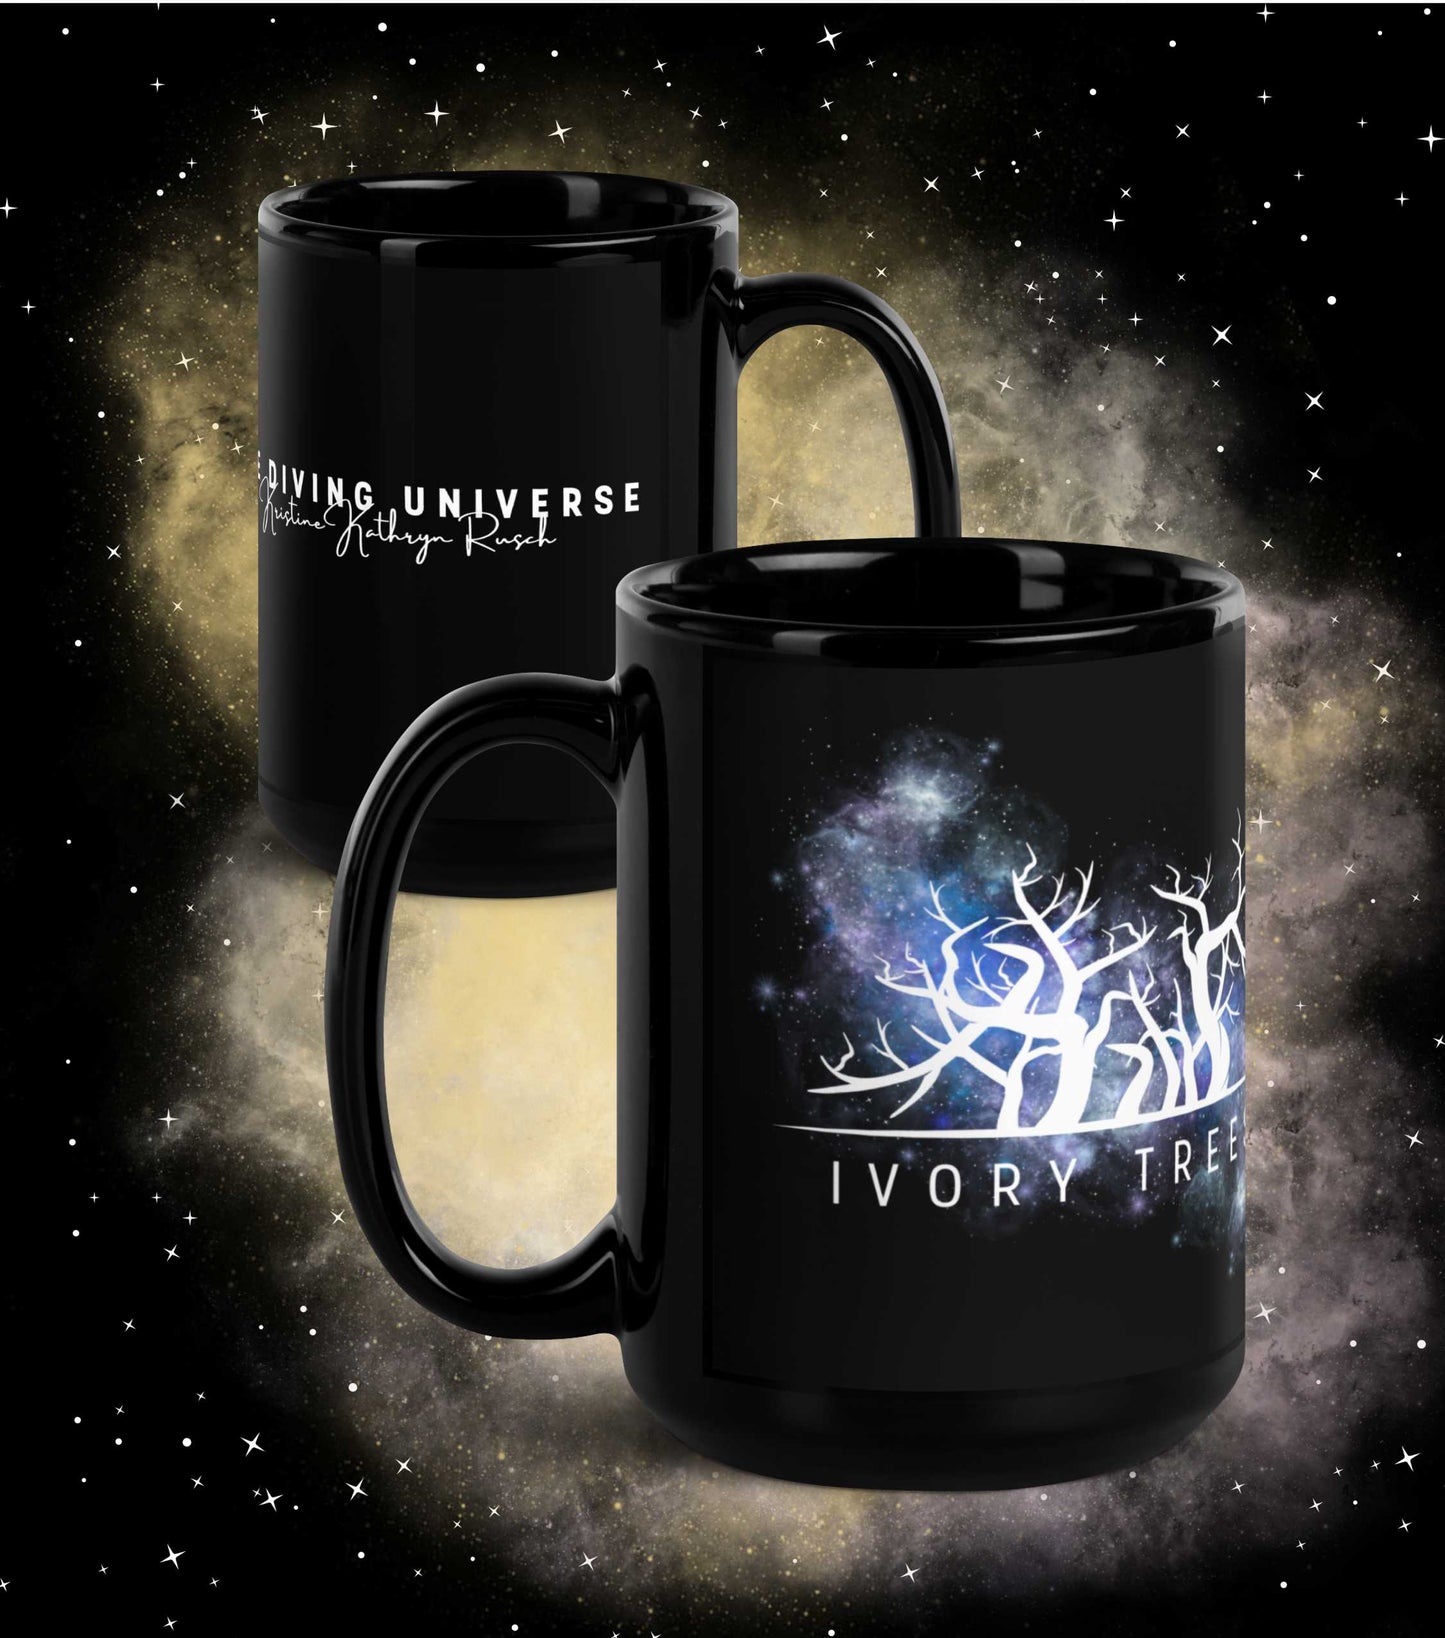 IVORY TREES NEBULA & Logo Black Glossy Mug - The Diving Universe by Kristine Kathryn Rusch